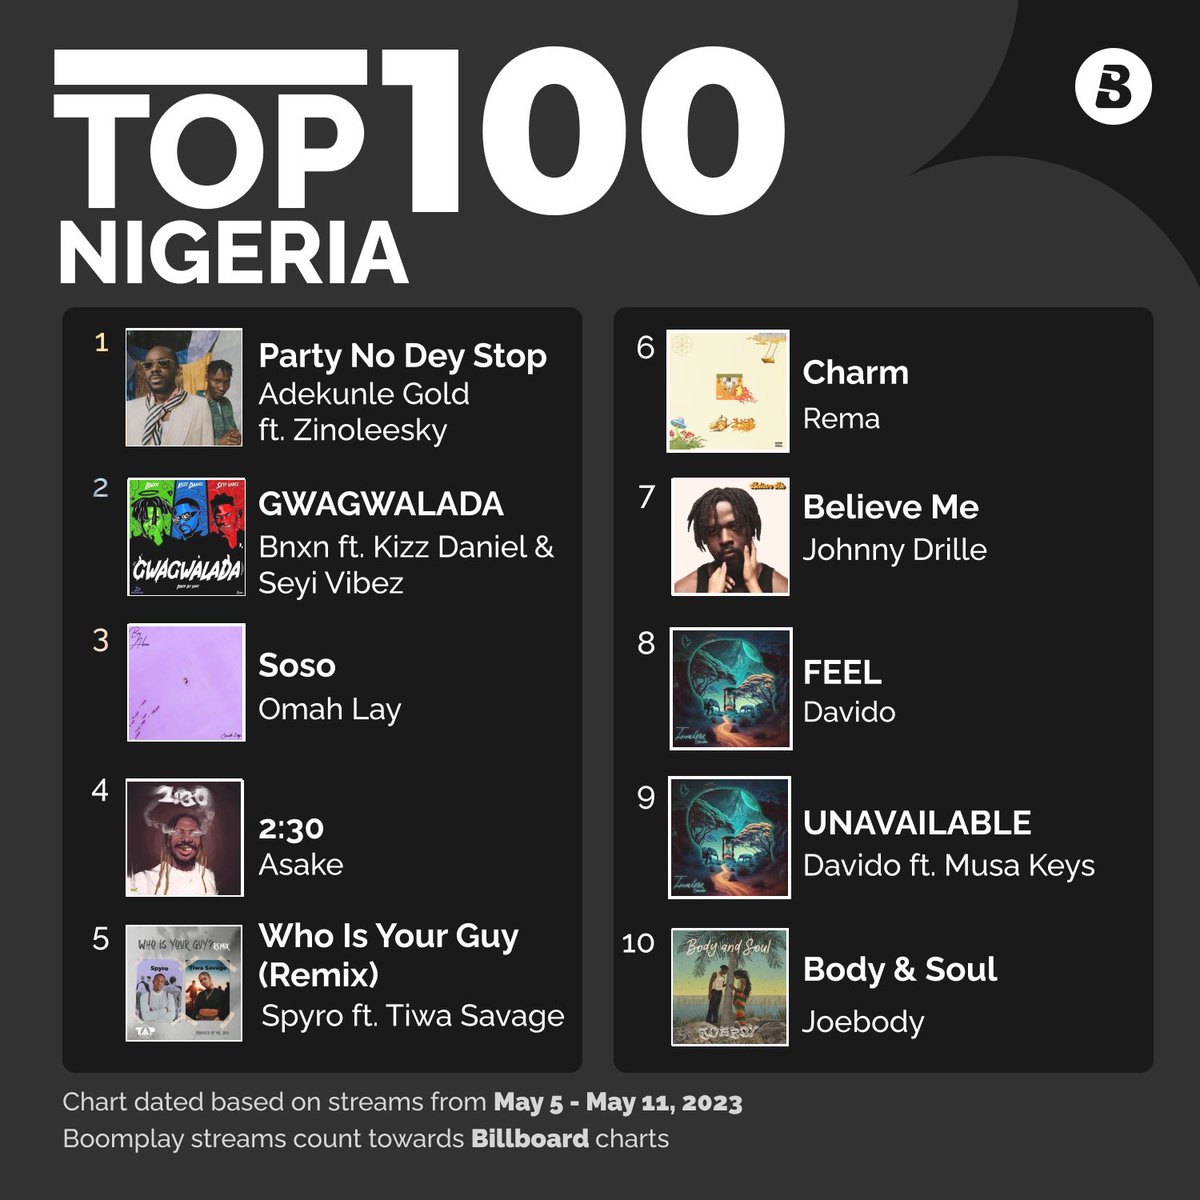 Let us know your fave jams here👇🏾

Top 10 most streamed songs on #BoomplayNigeria 👉🏾Boom.lnk.to/Top100Nigeria

@adekunleGOLD - PNDS ft @zinoleesky01
@BNXN - Gwagwalada ft @KizzDaniel @seyi_vibez
@Omah_Lay - Soso
@asakemusik - 2:30
@spyro__Official - WIYG ft @TiwaSavage 

#Boomplay